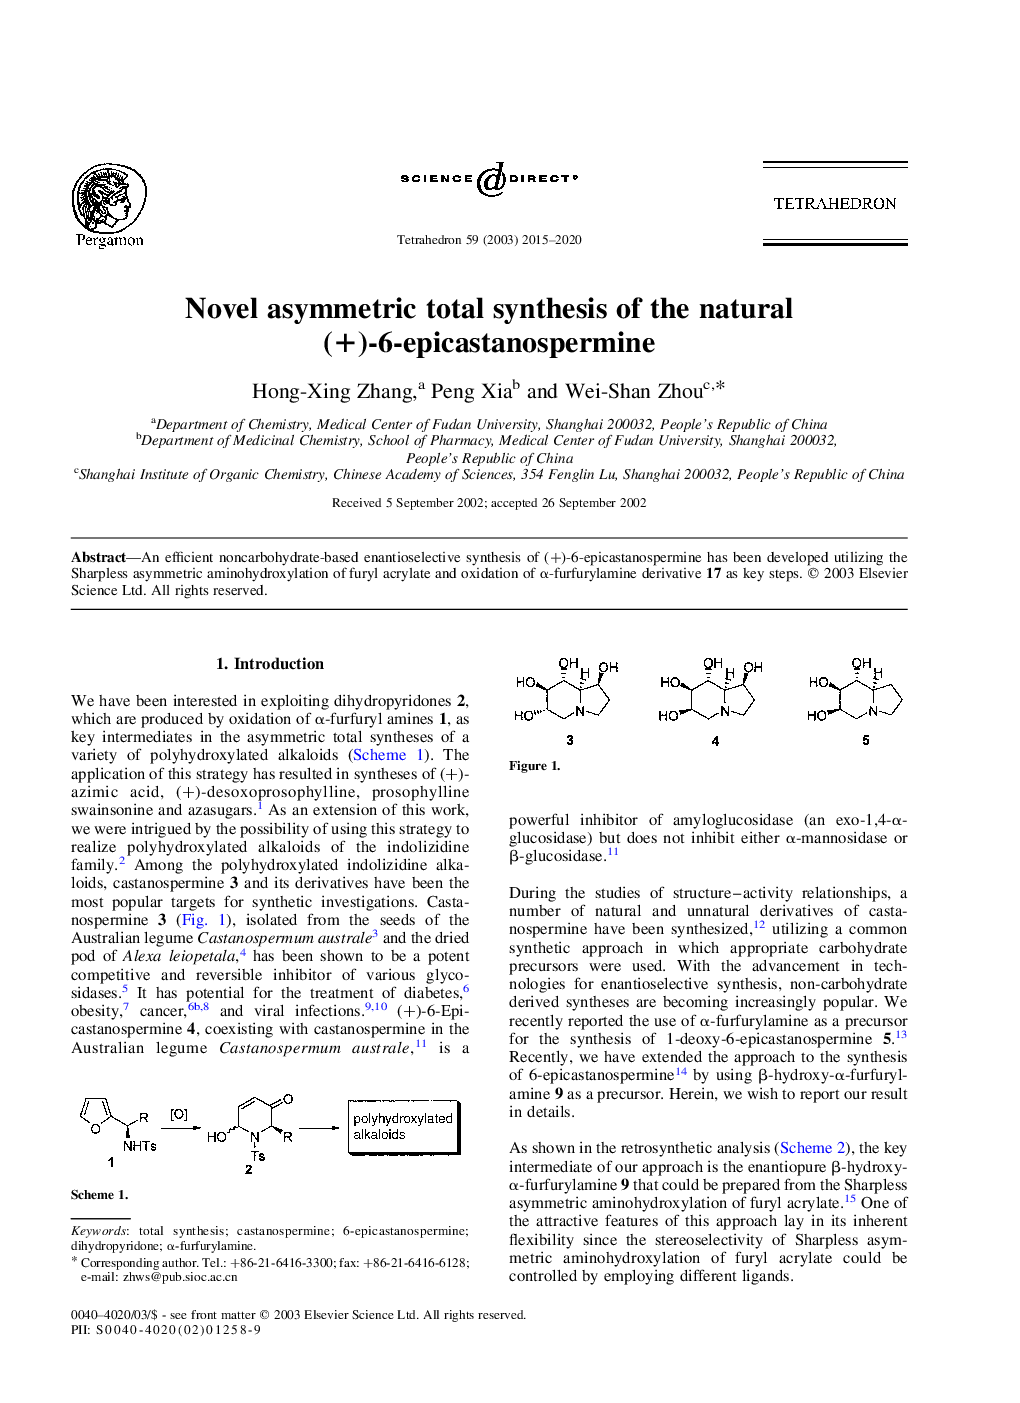 Novel asymmetric total synthesis of the natural (+)-6-epicastanospermine